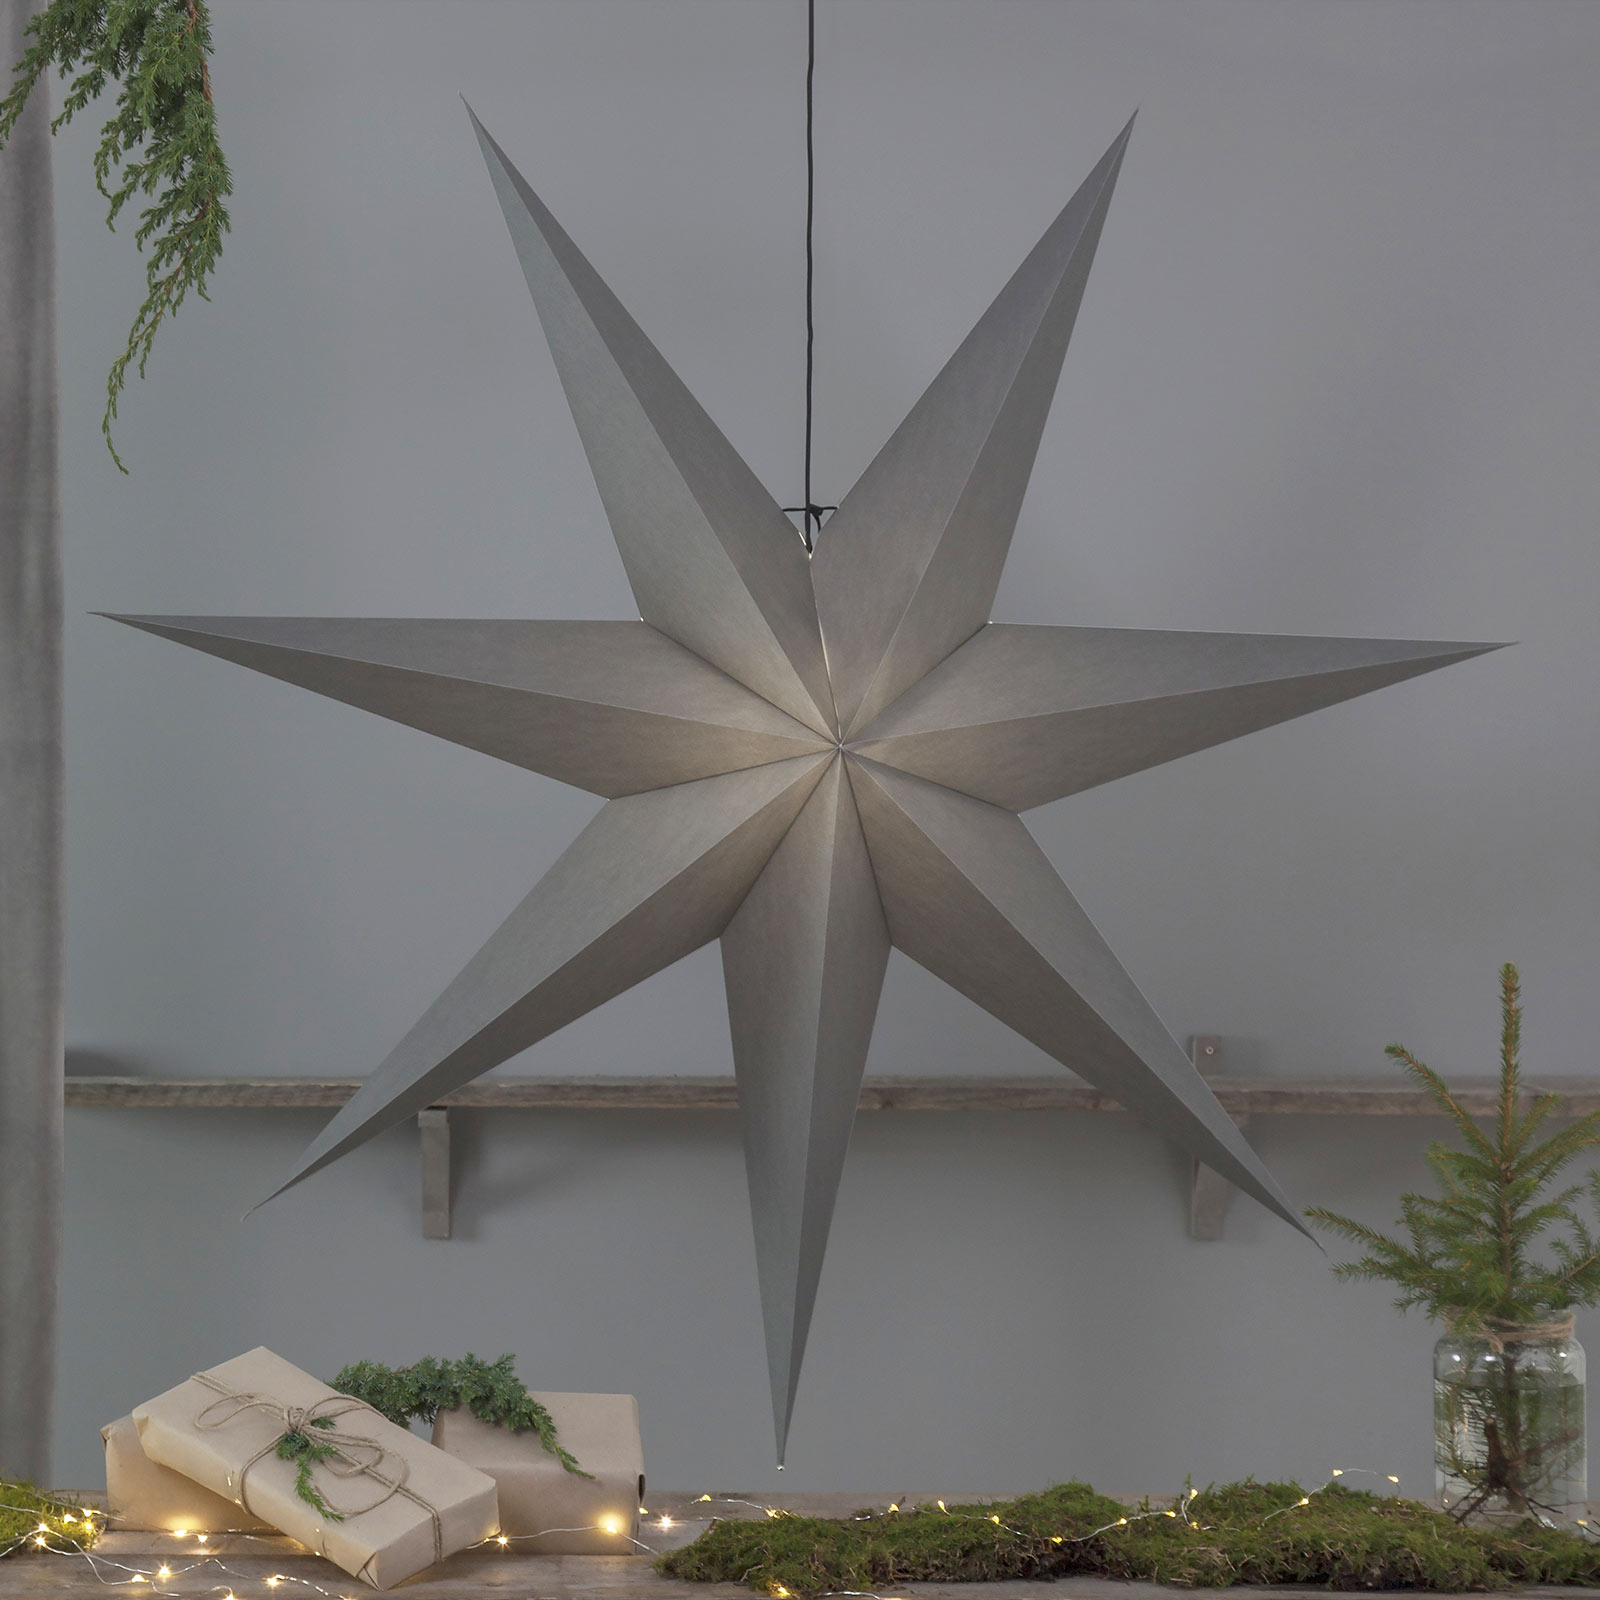 Ozen seven-pointed paper star, 140 cm diameter